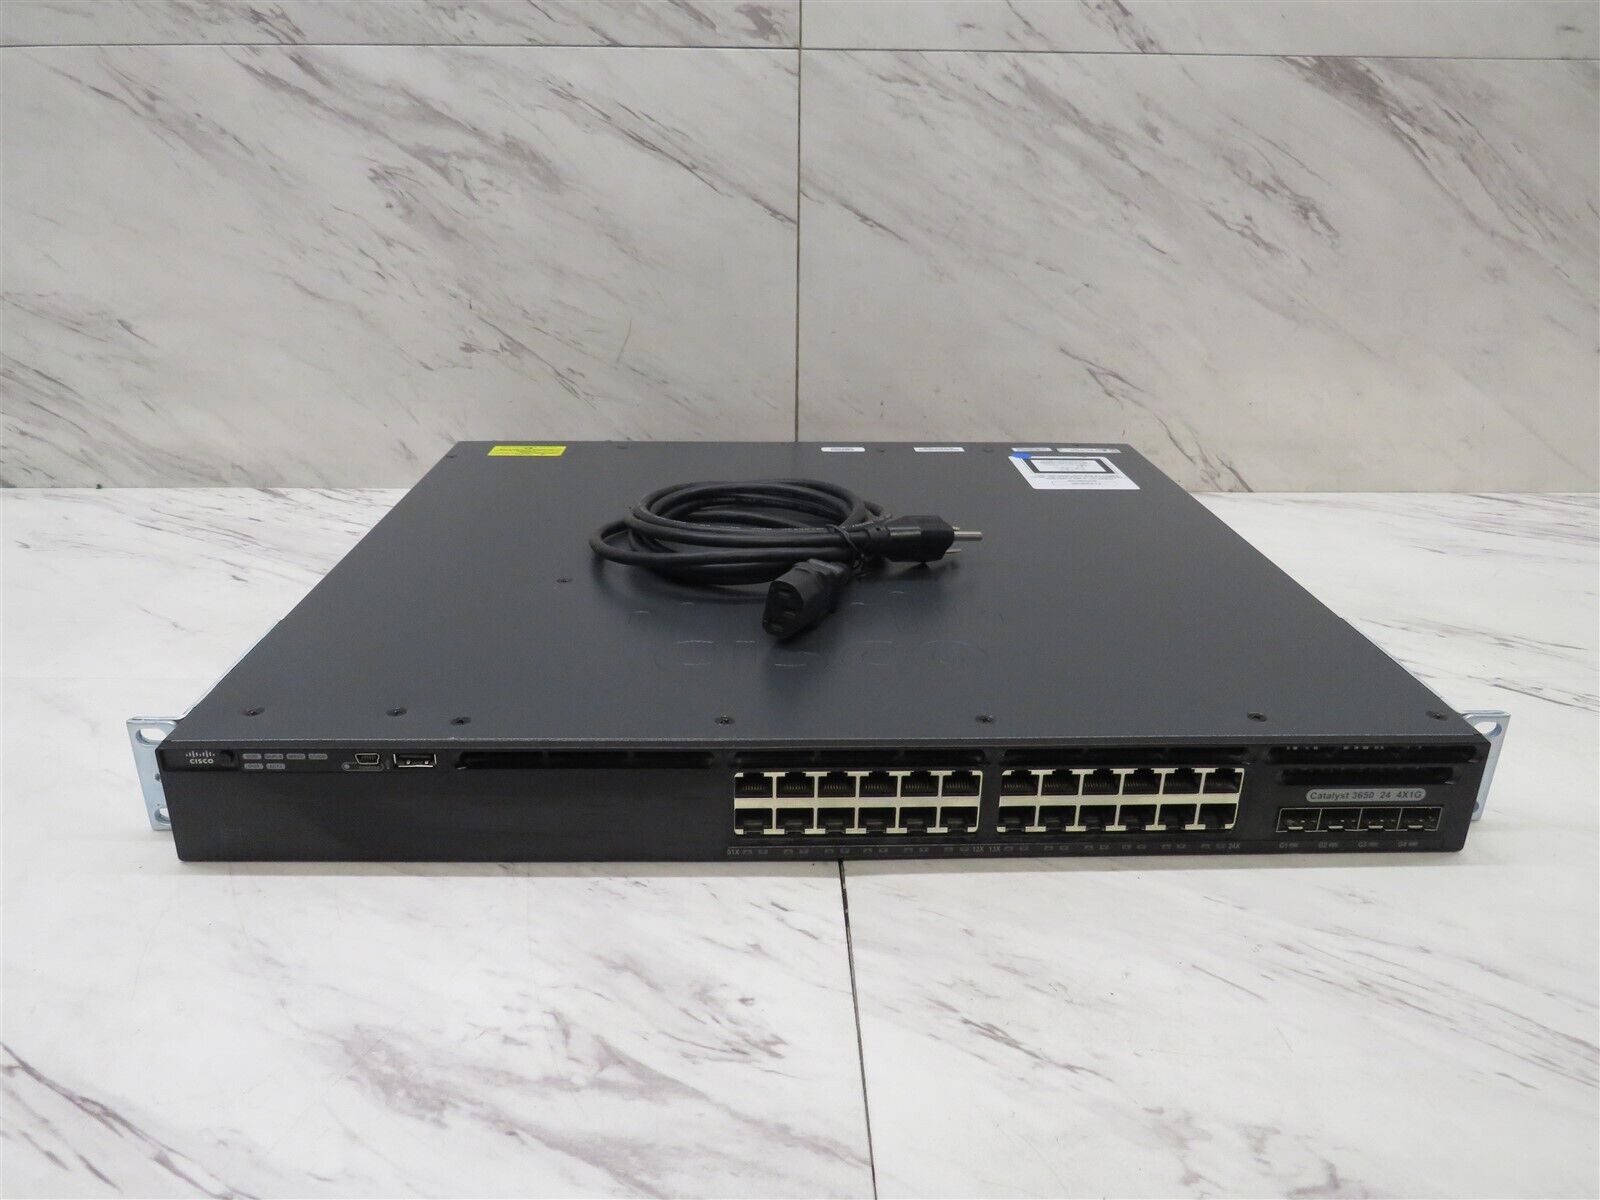 Cisco 3650 Series 24-Port Gigabit Ethernet Switch WS-C3650-24TS-L w/ C3650-STACK